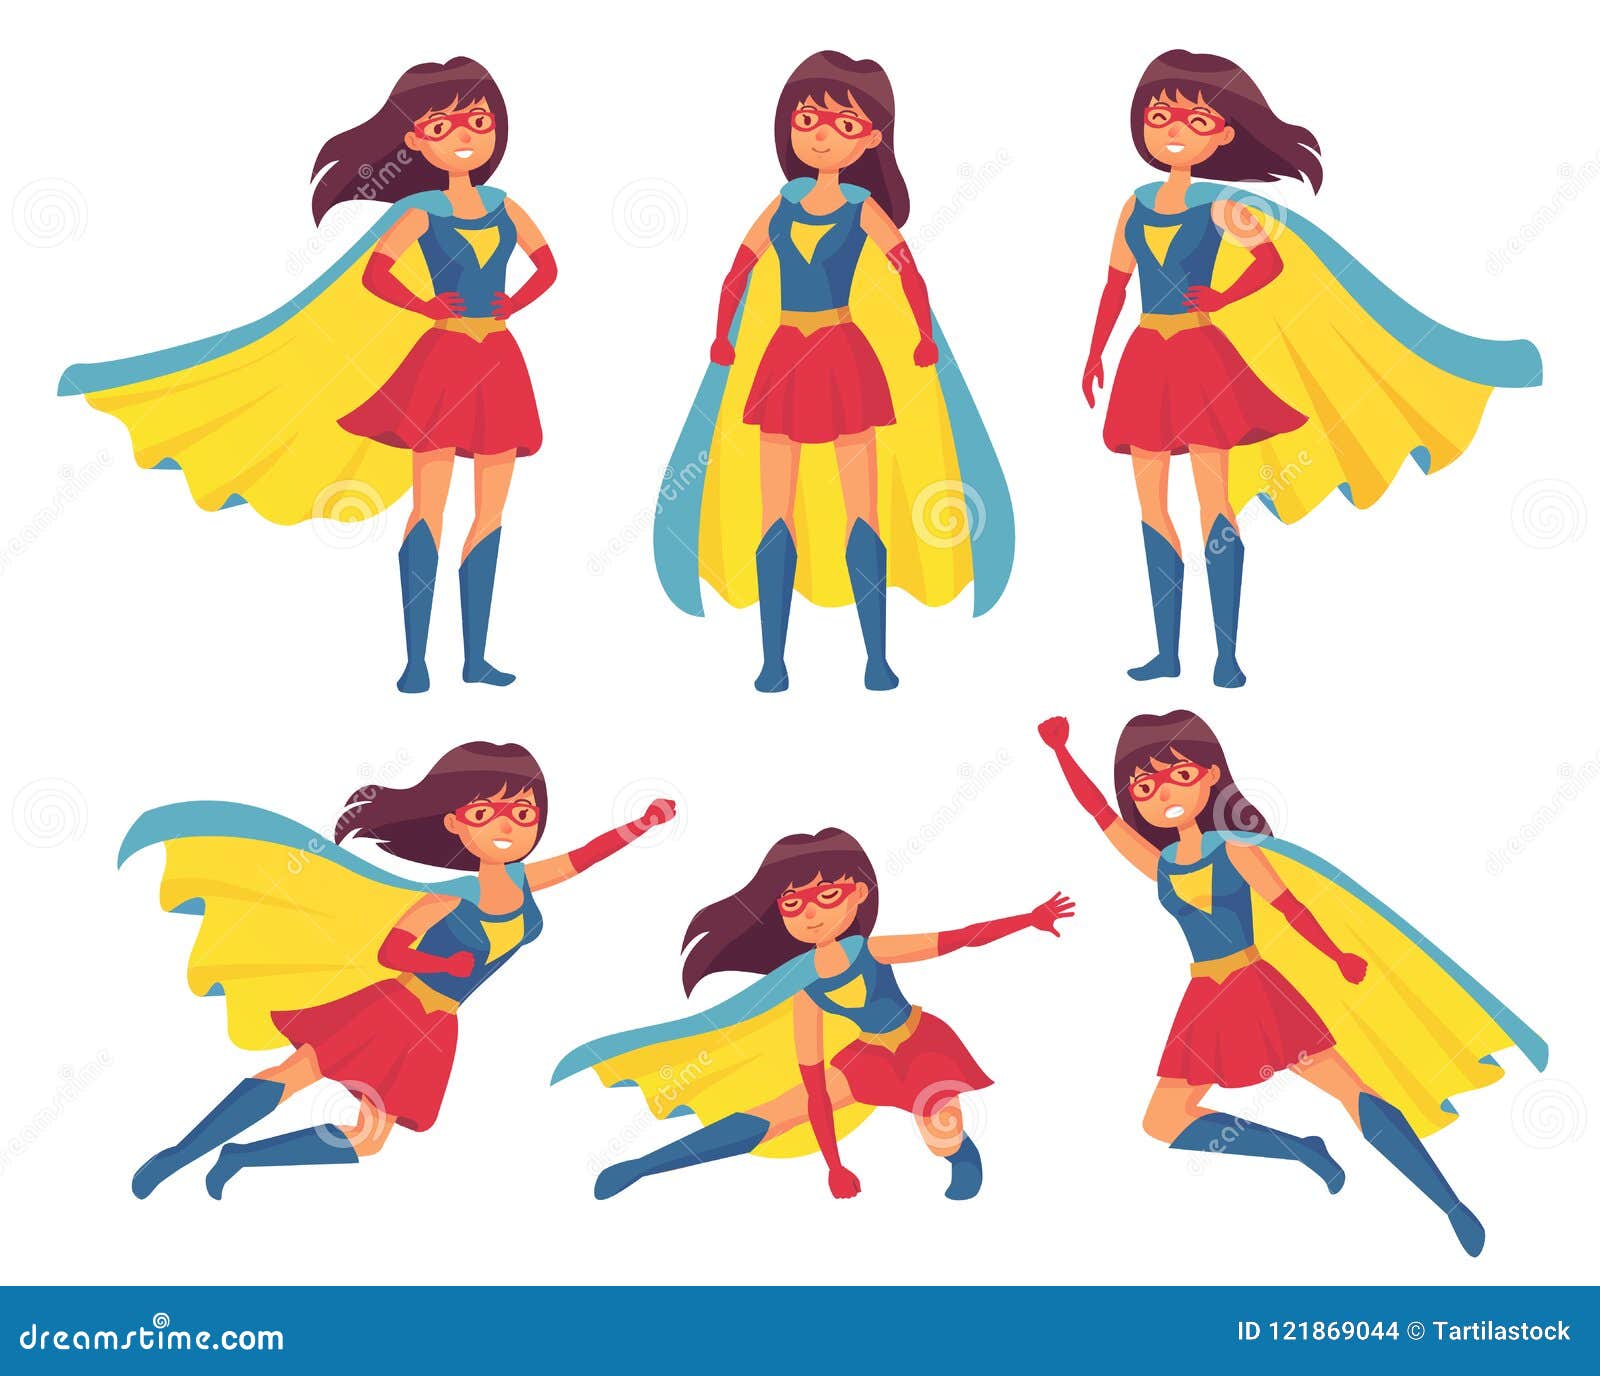 woman superhero character. wonder girl in superwoman costume with cloak. superheroes hero character  